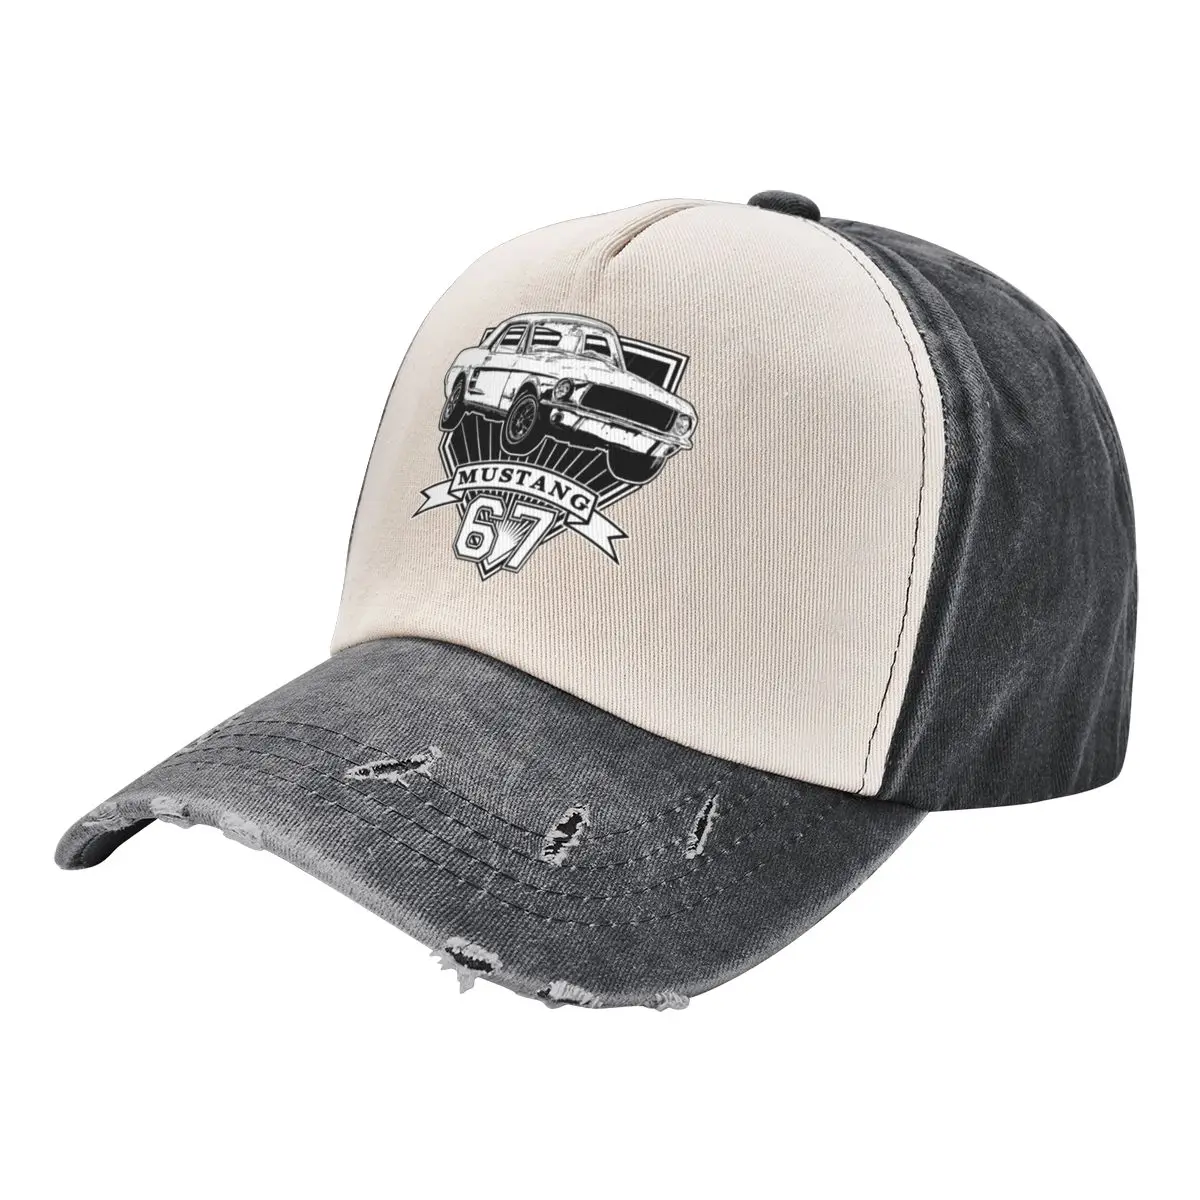 

67 Mustang Coupe Baseball Cap New In The Hat western Hat Luxury Cap Caps For Women Men's